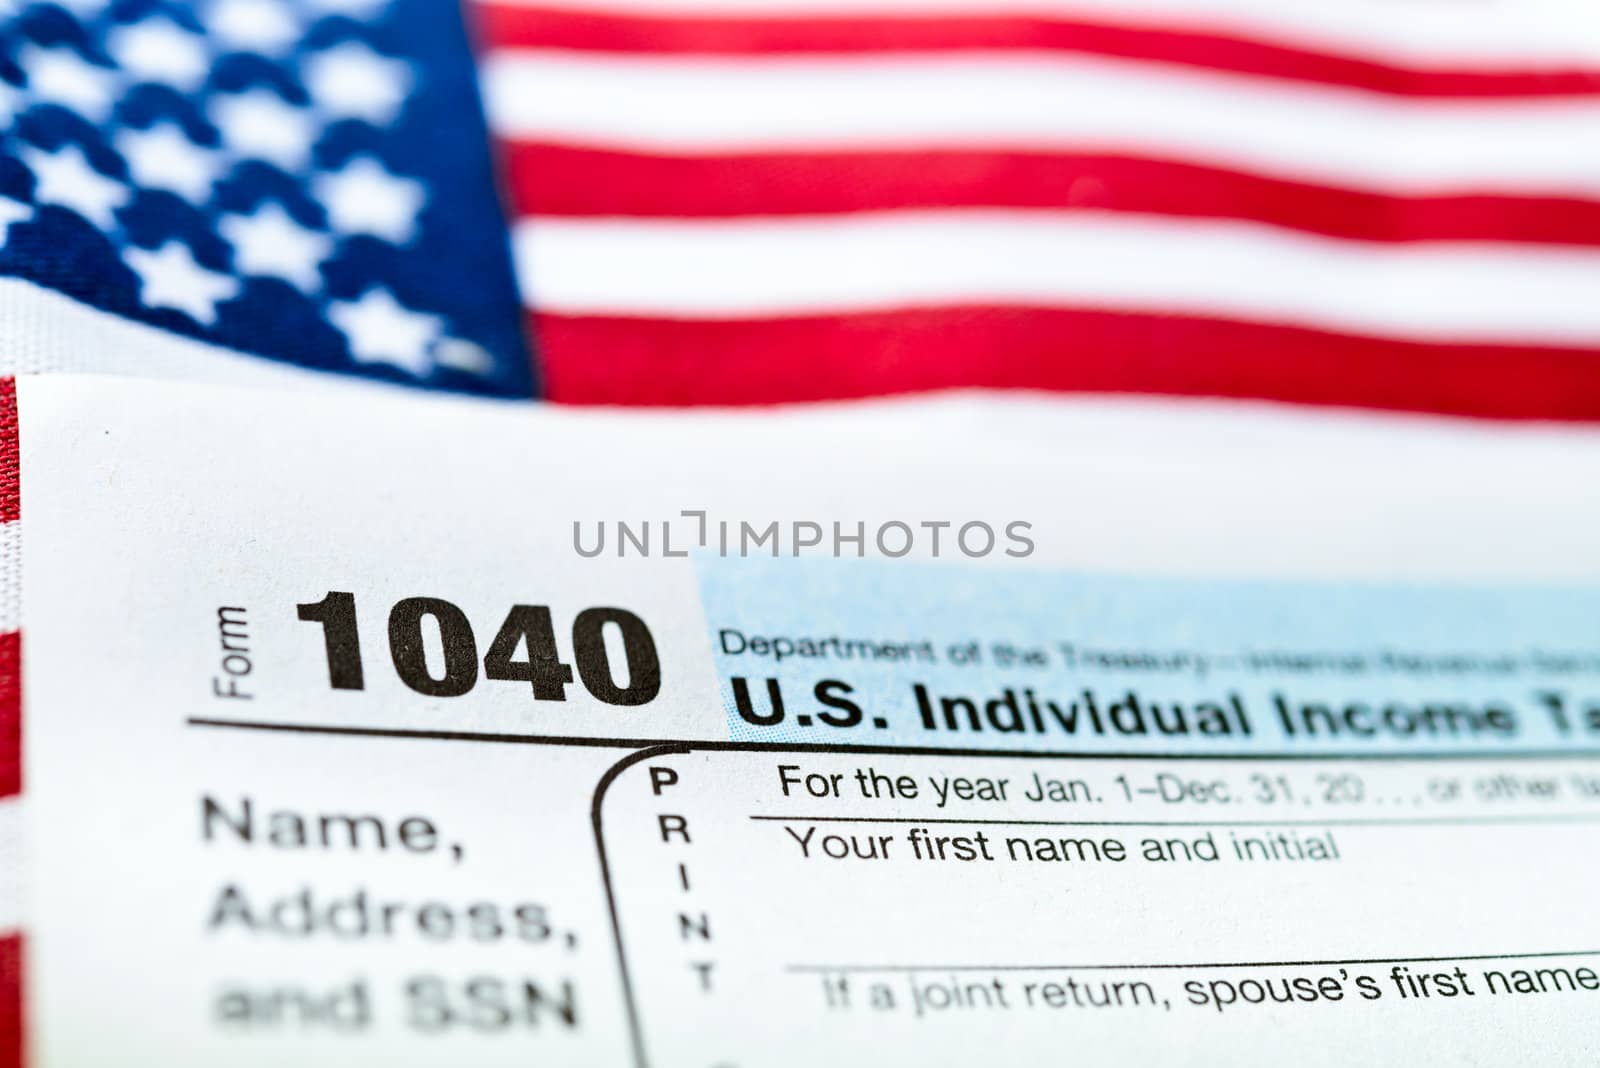 U.S. Income Tax Return form 1040. by lobzik